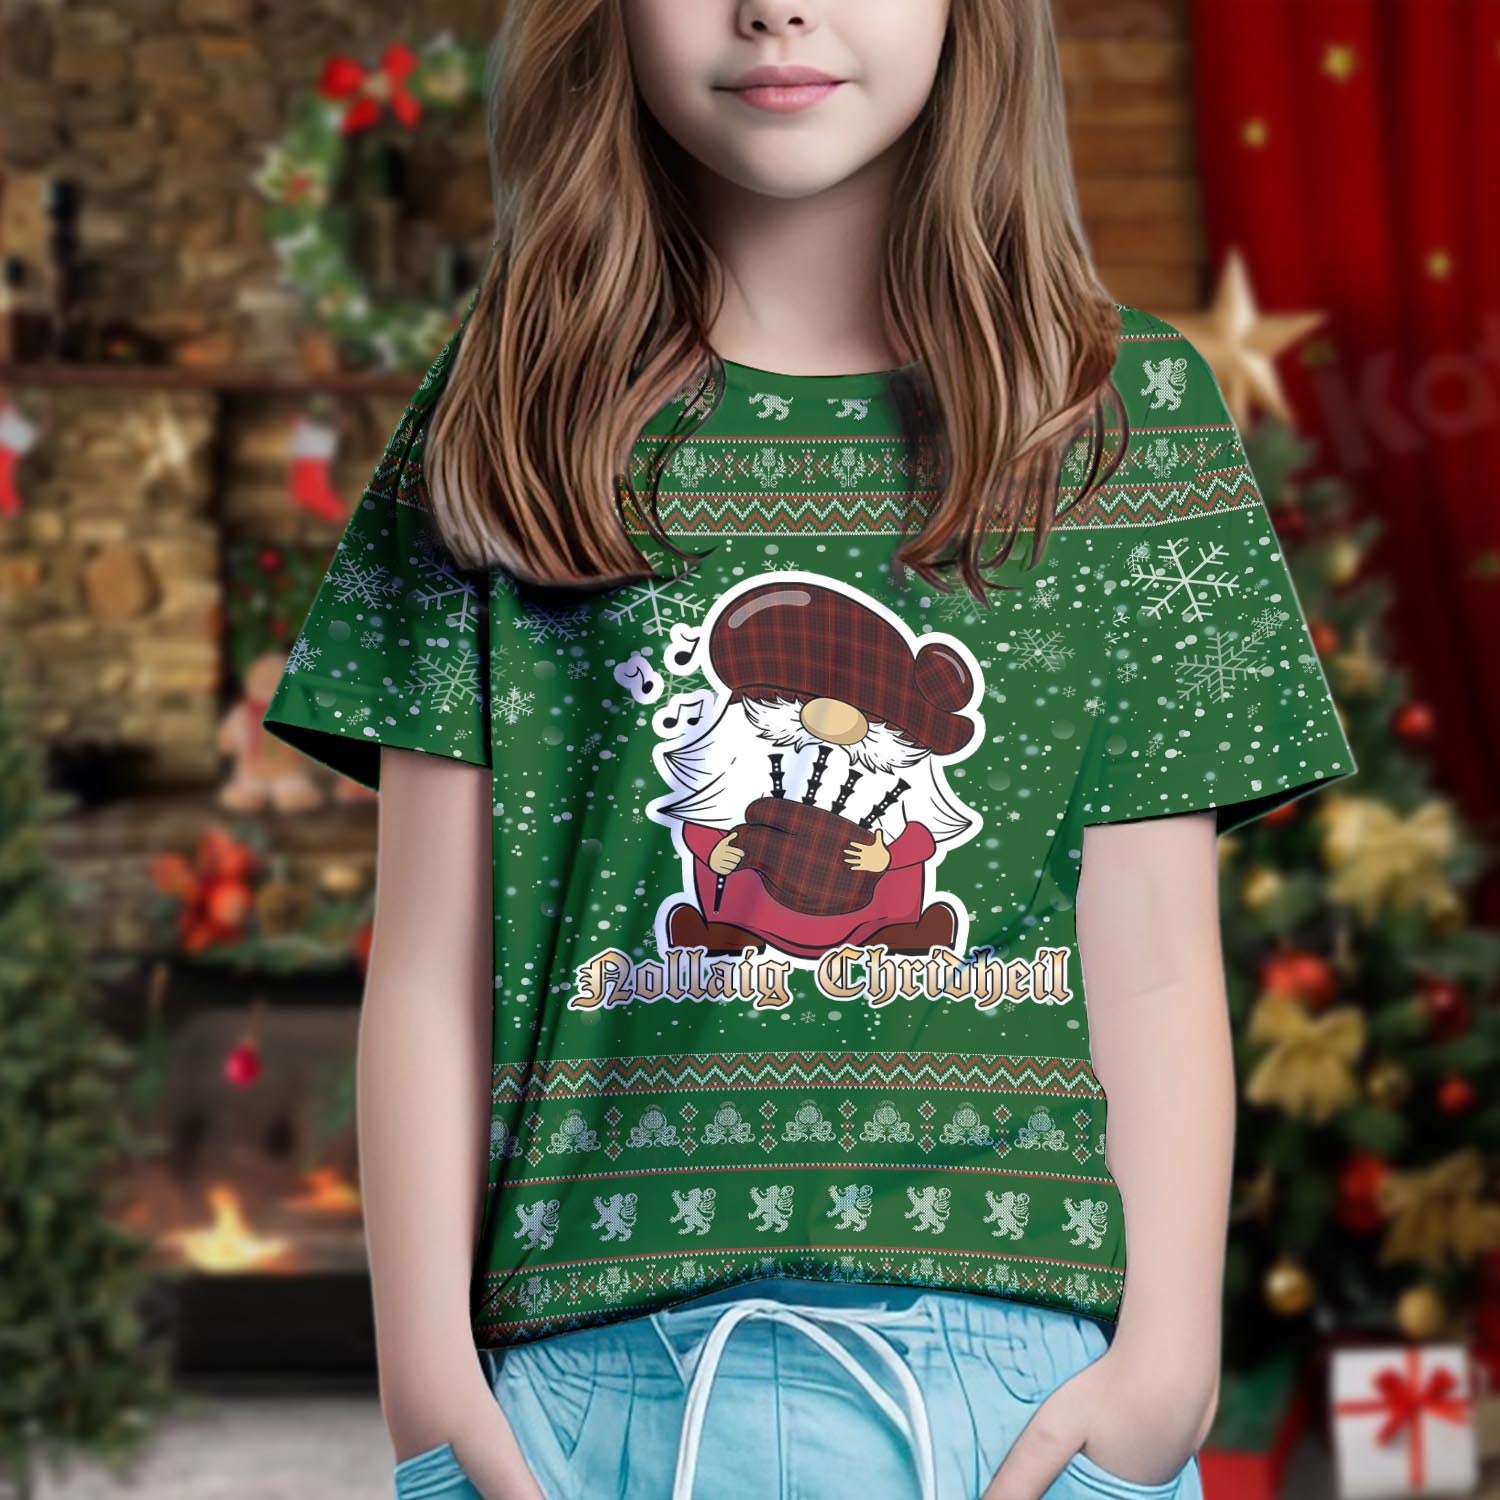 MacIan Clan Christmas Family T-Shirt with Funny Gnome Playing Bagpipes Kid's Shirt Green - Tartanvibesclothing